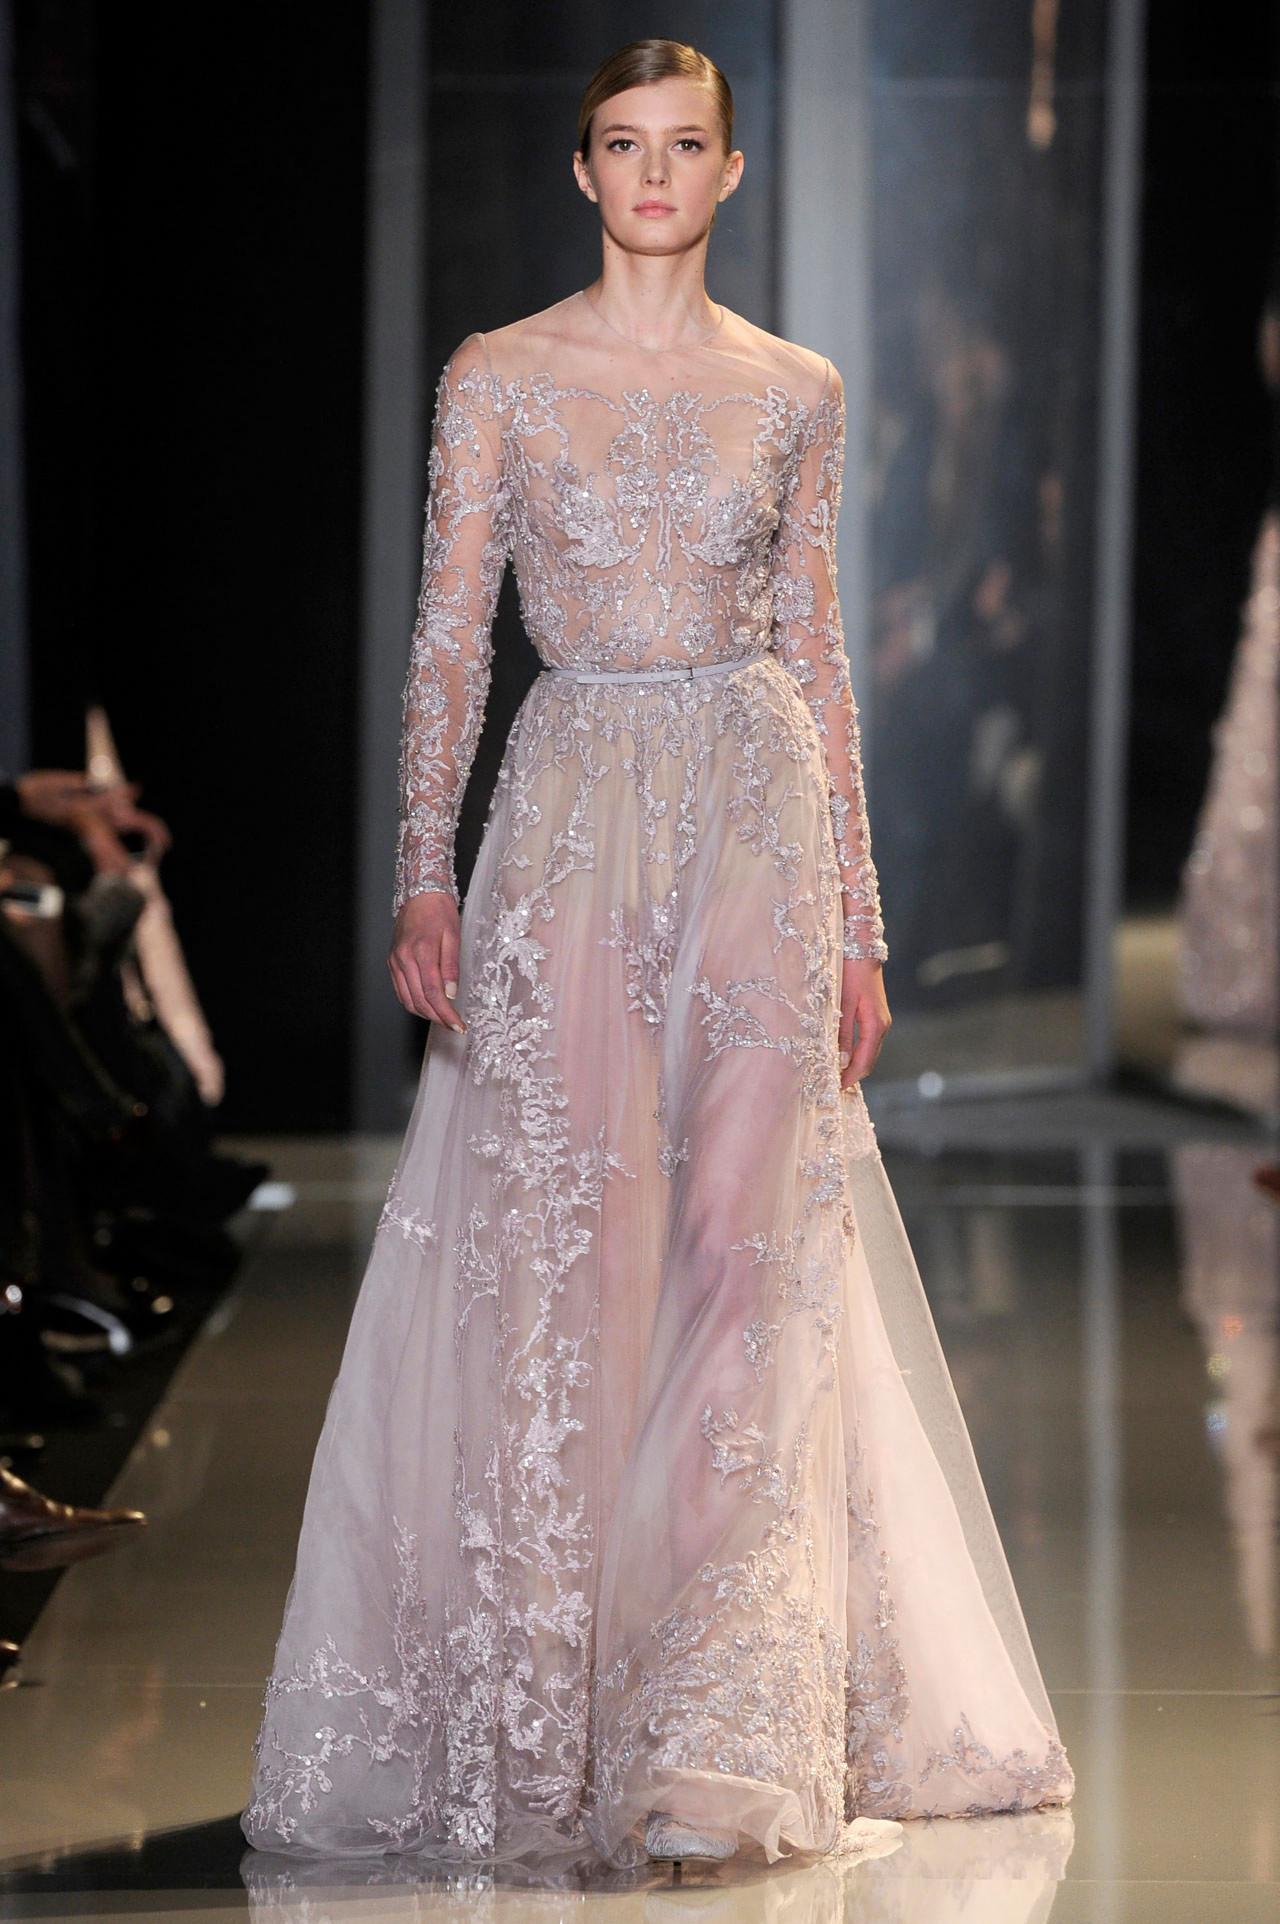 Sheer Wedding Gowns
 Top 10 Wedding Dress Trends For 2013